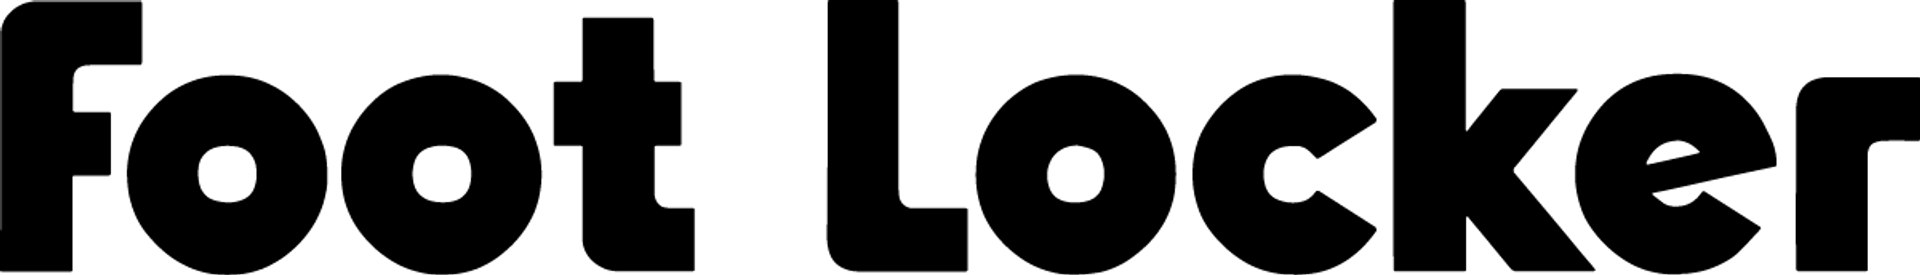 FOOT LOCKER logo of current catalogue